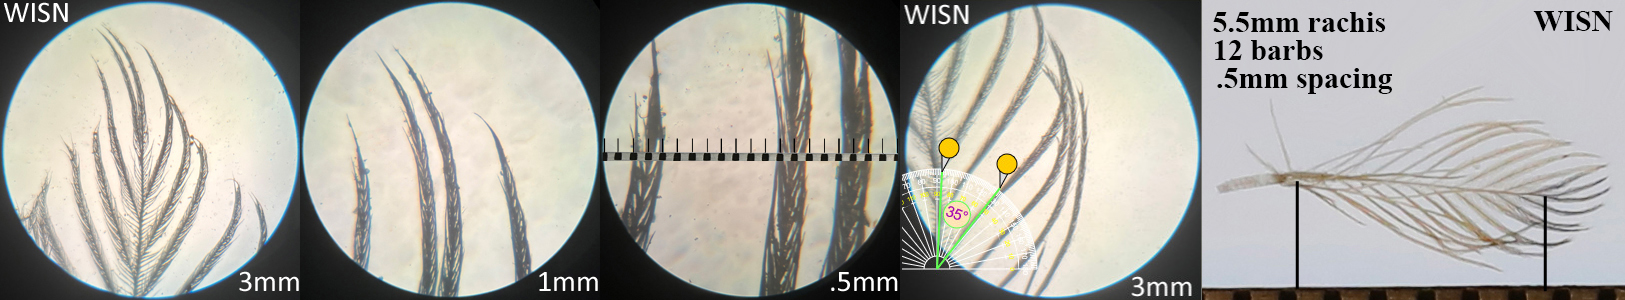 Wilson's Snipe WISN auricular details